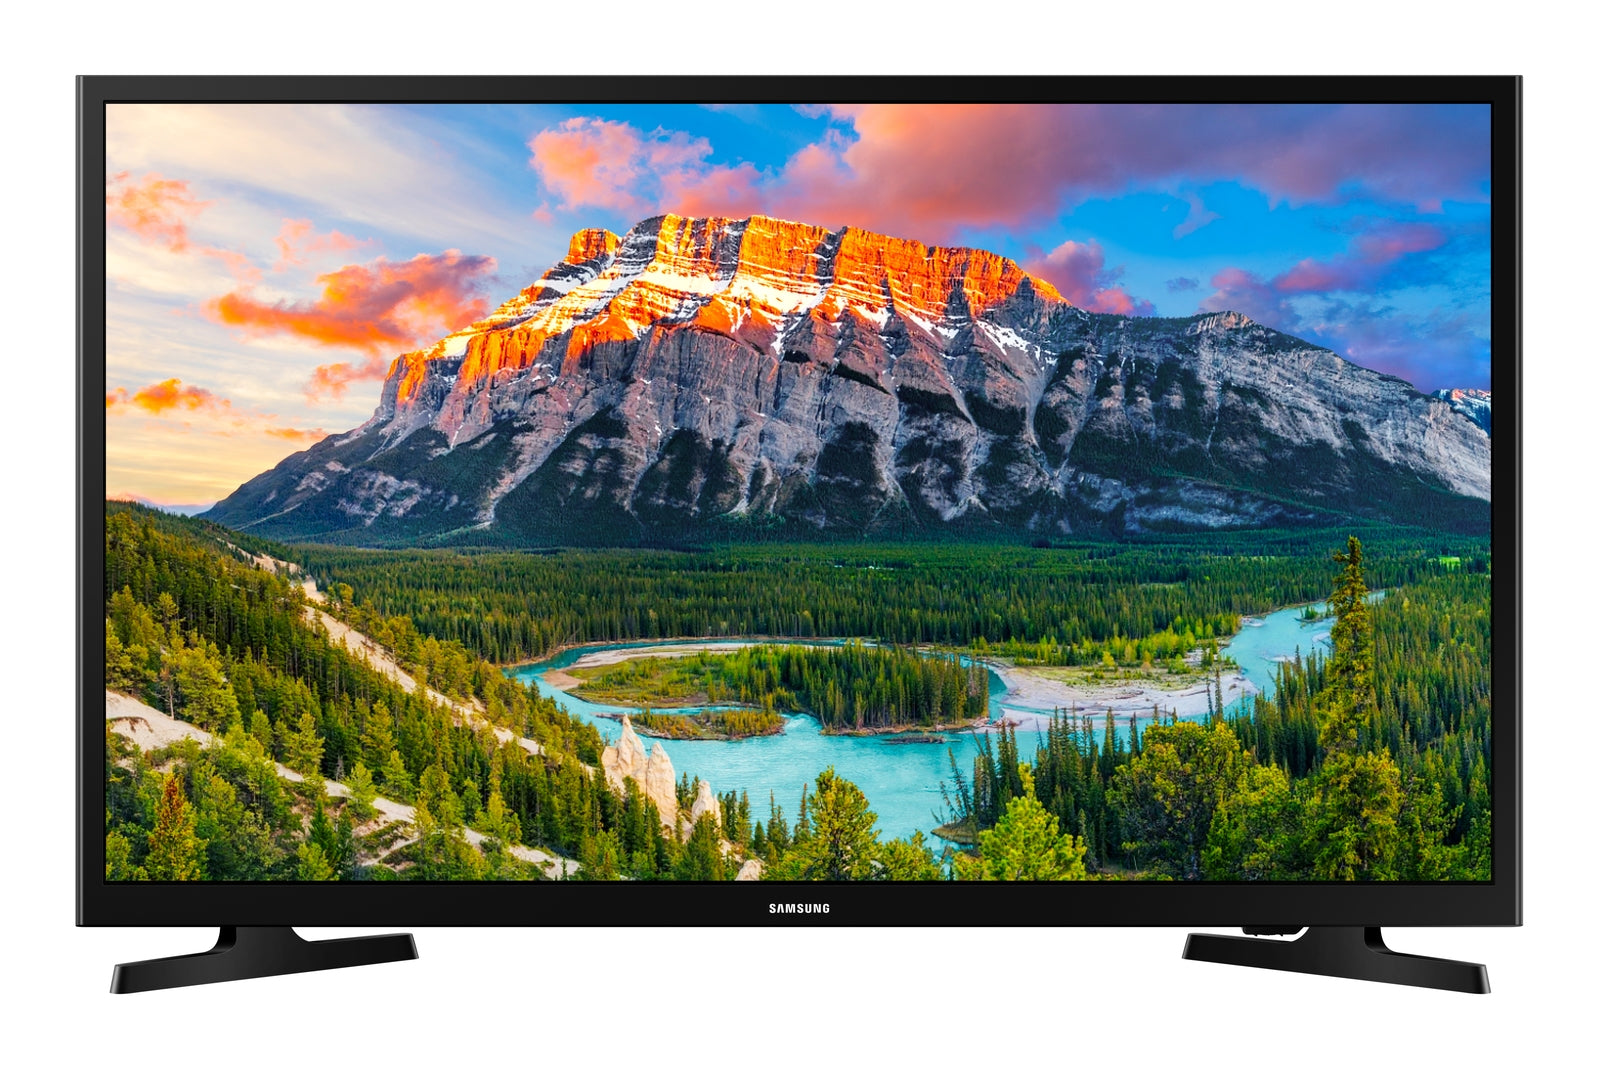 Samsung 32" Class N5300 Smart Full HD TV (2018)